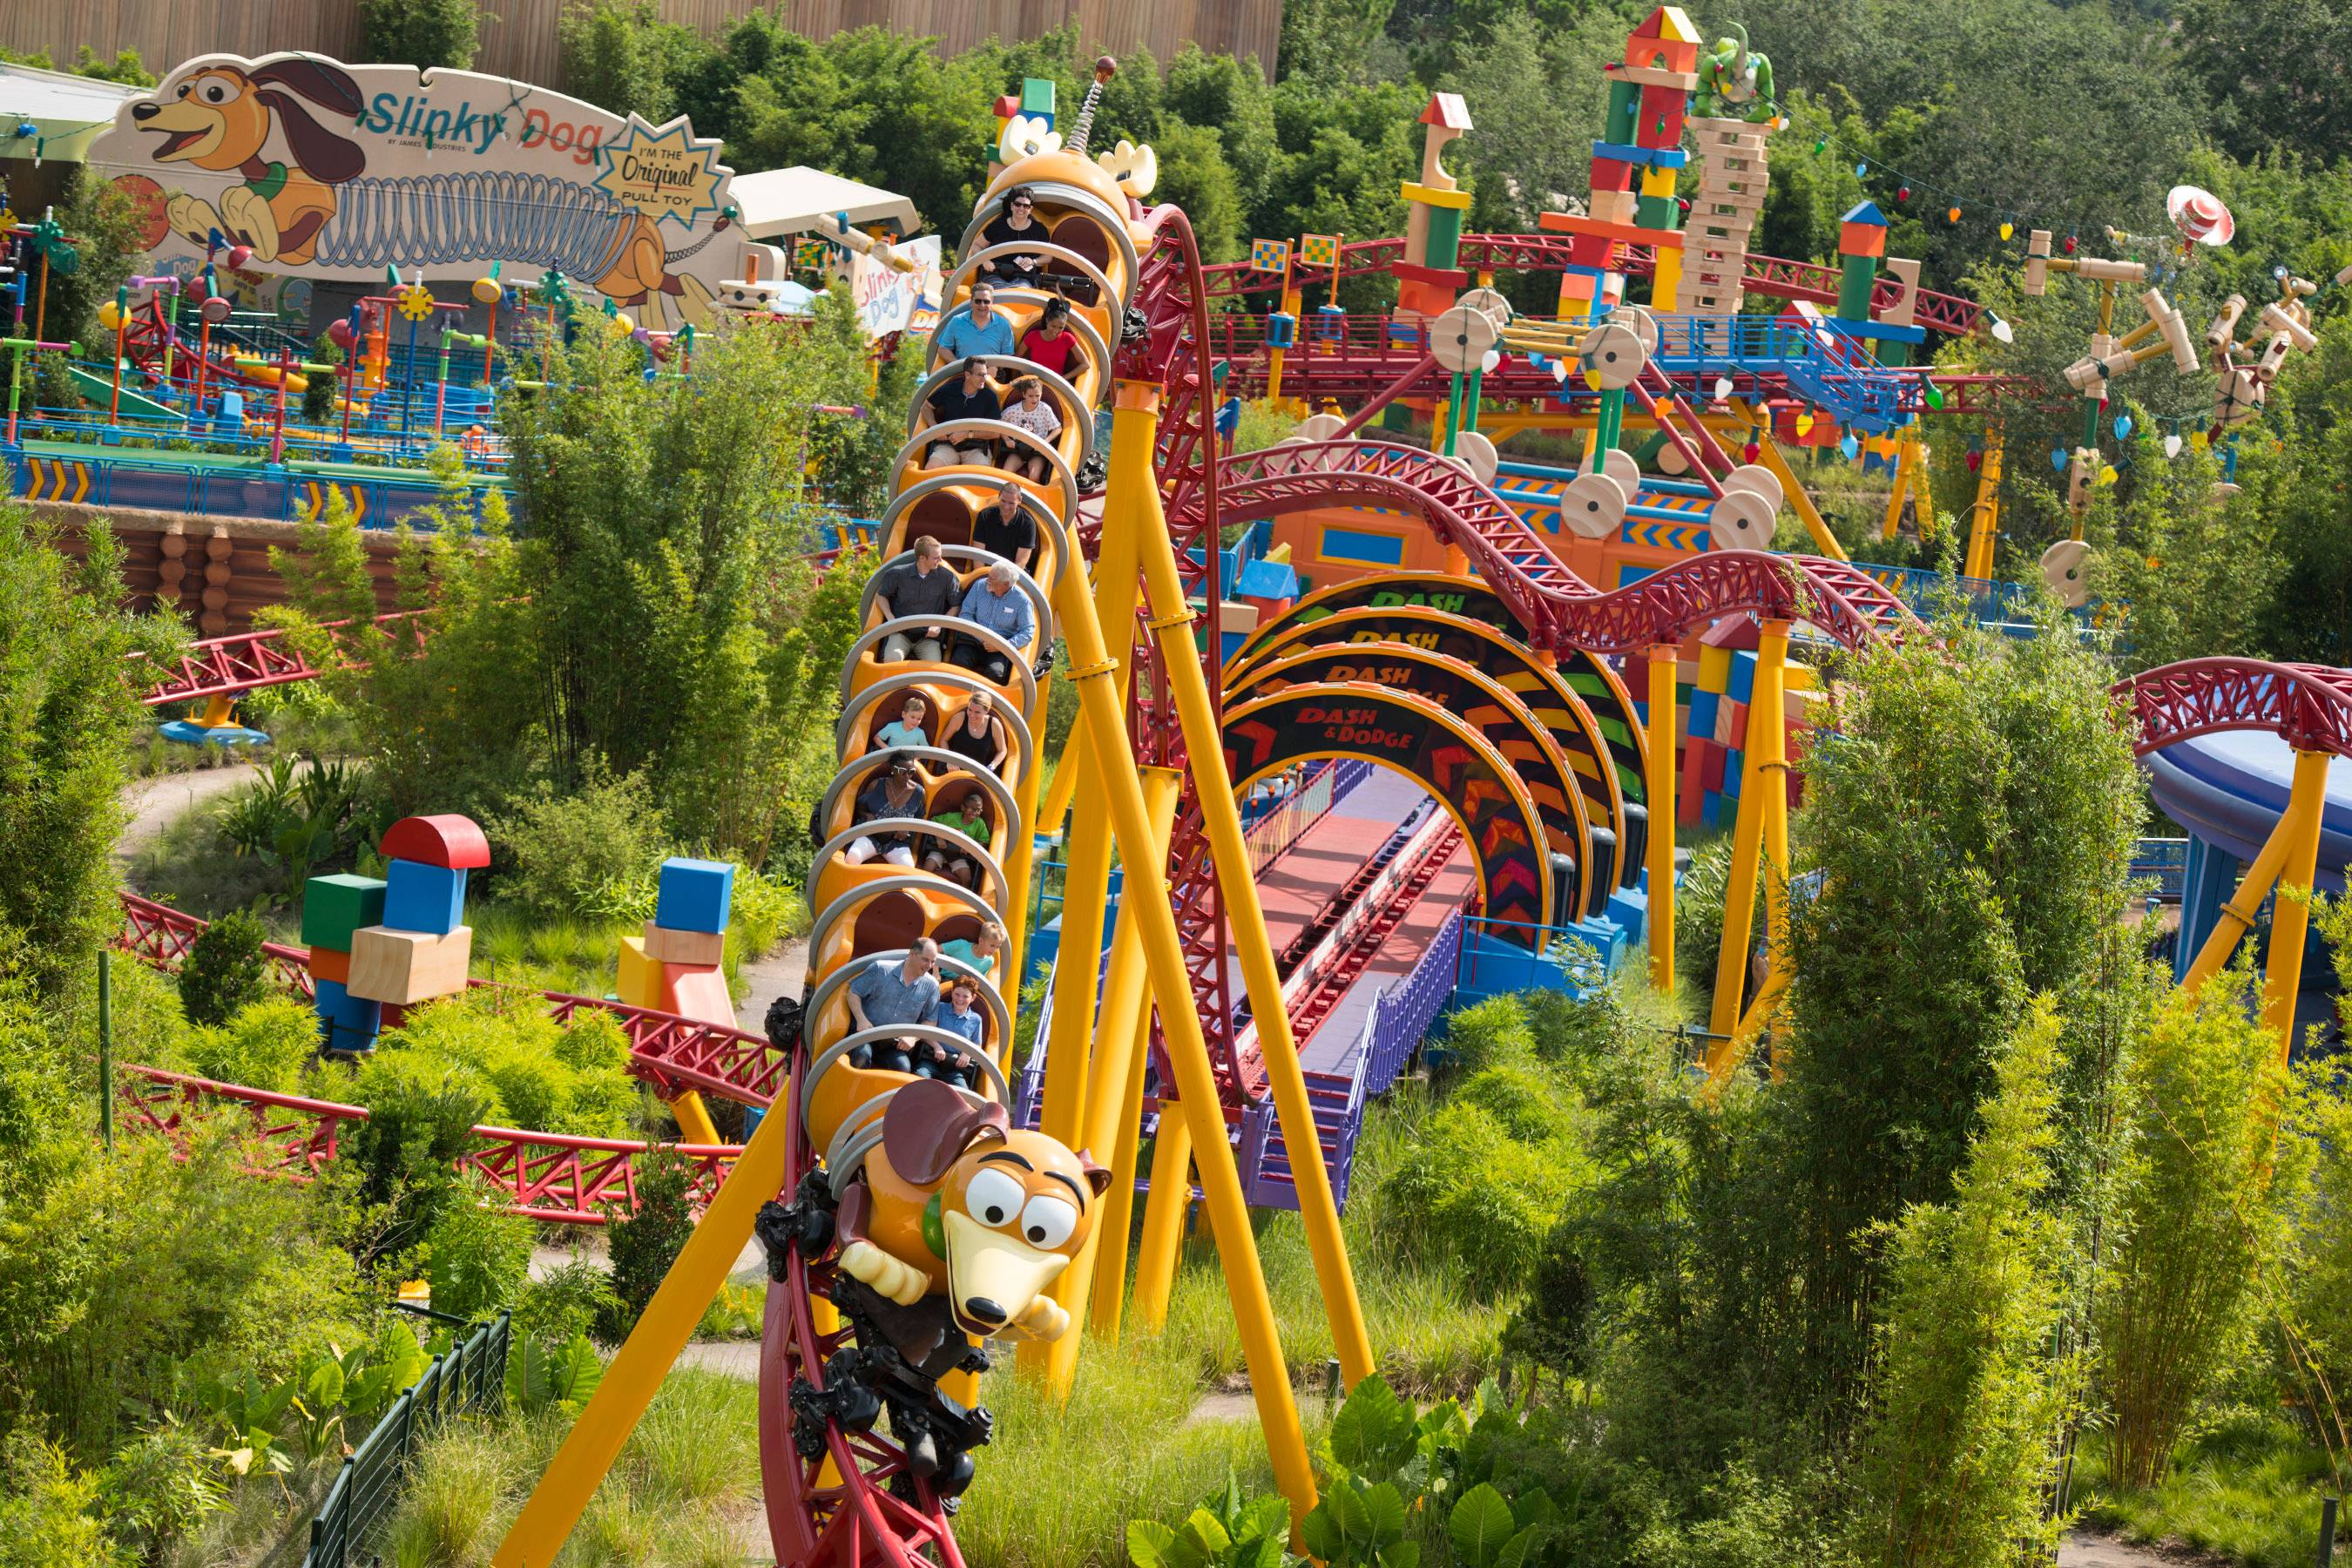 Slinky Dog Dash coaster at Toy Story Land